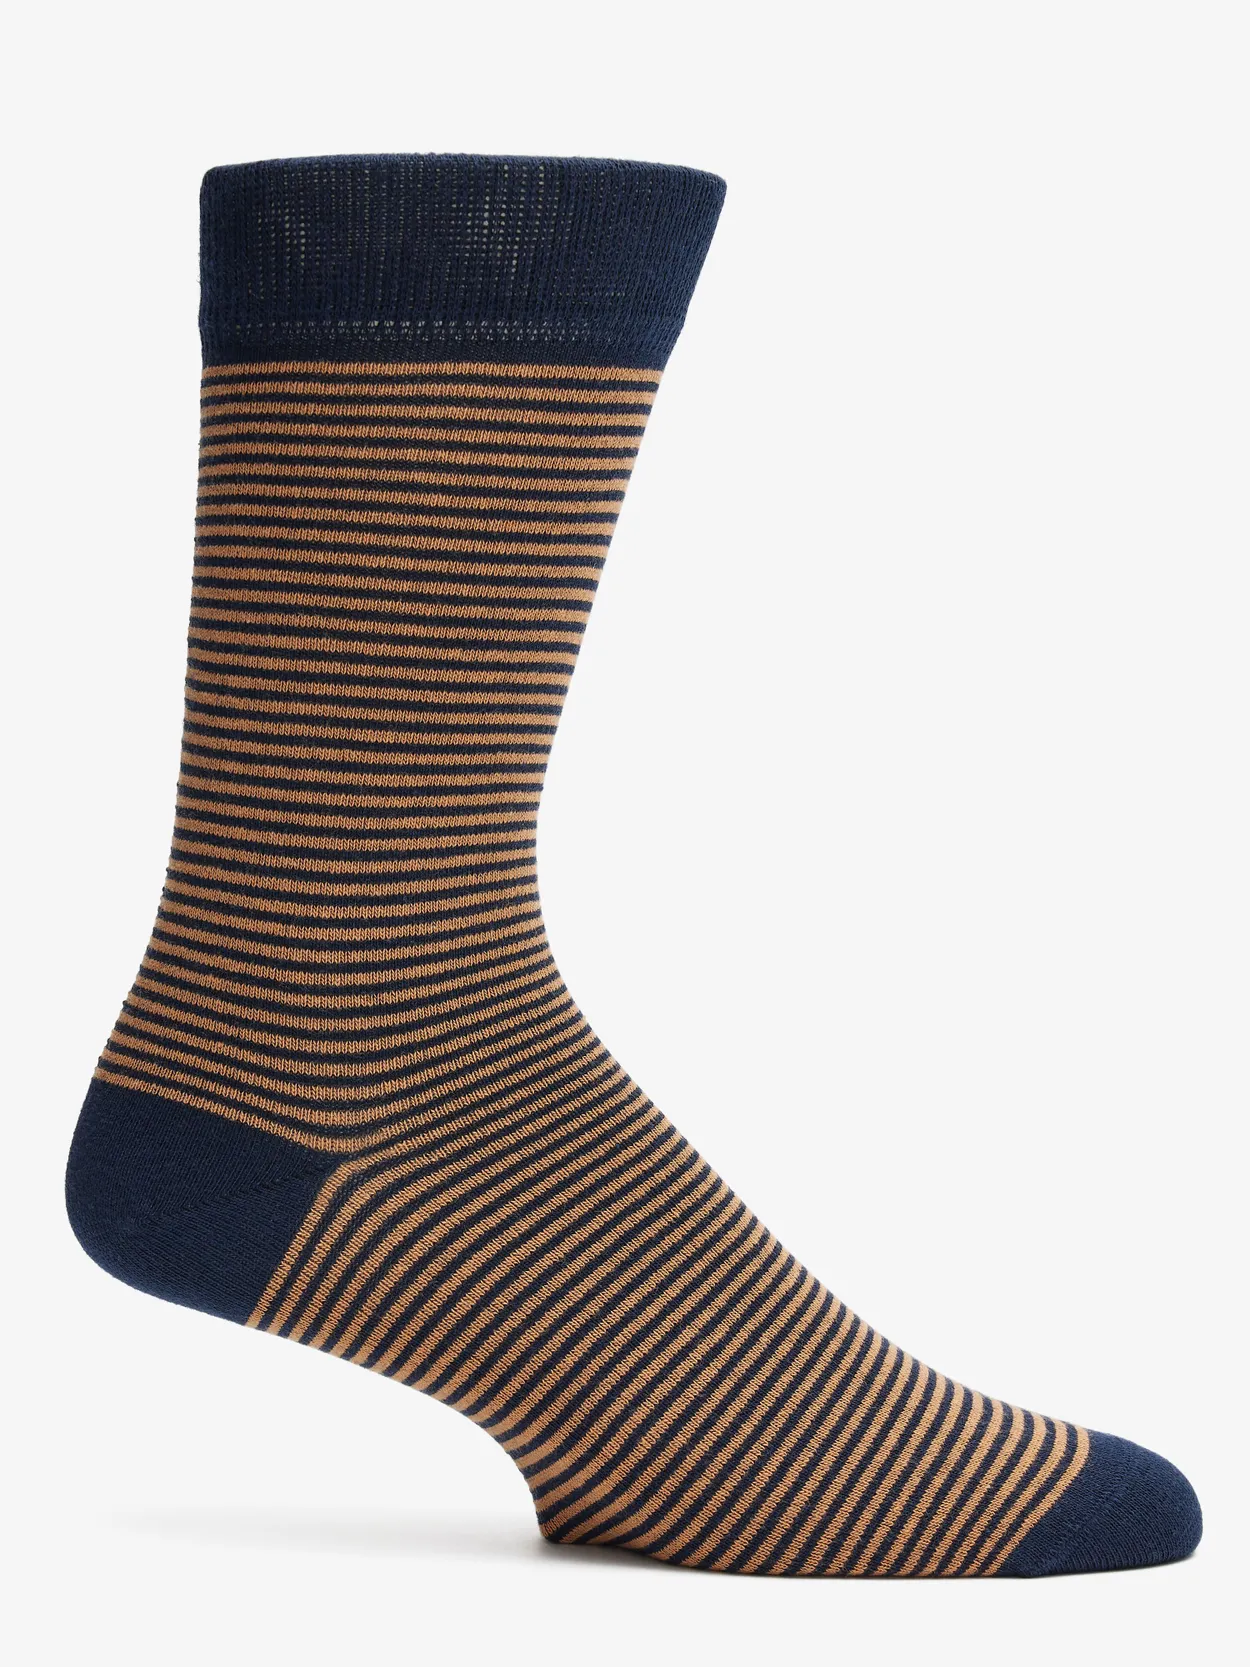 Blue & Brown Socks Almeria